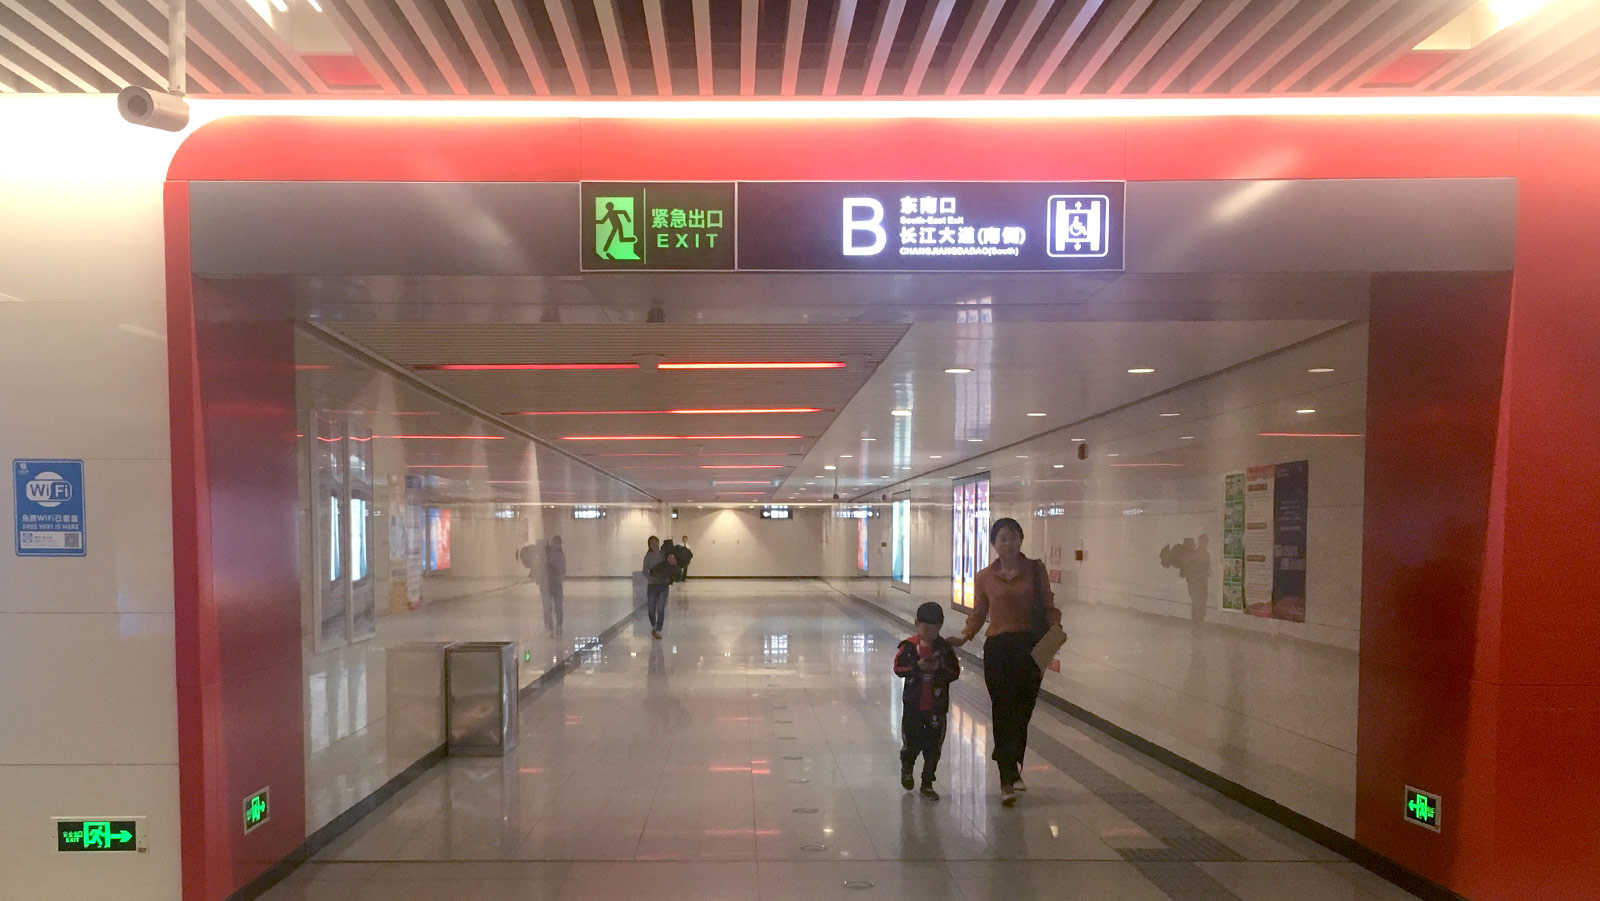 Smart lighting for the Shijiazhuang Metro (photo)